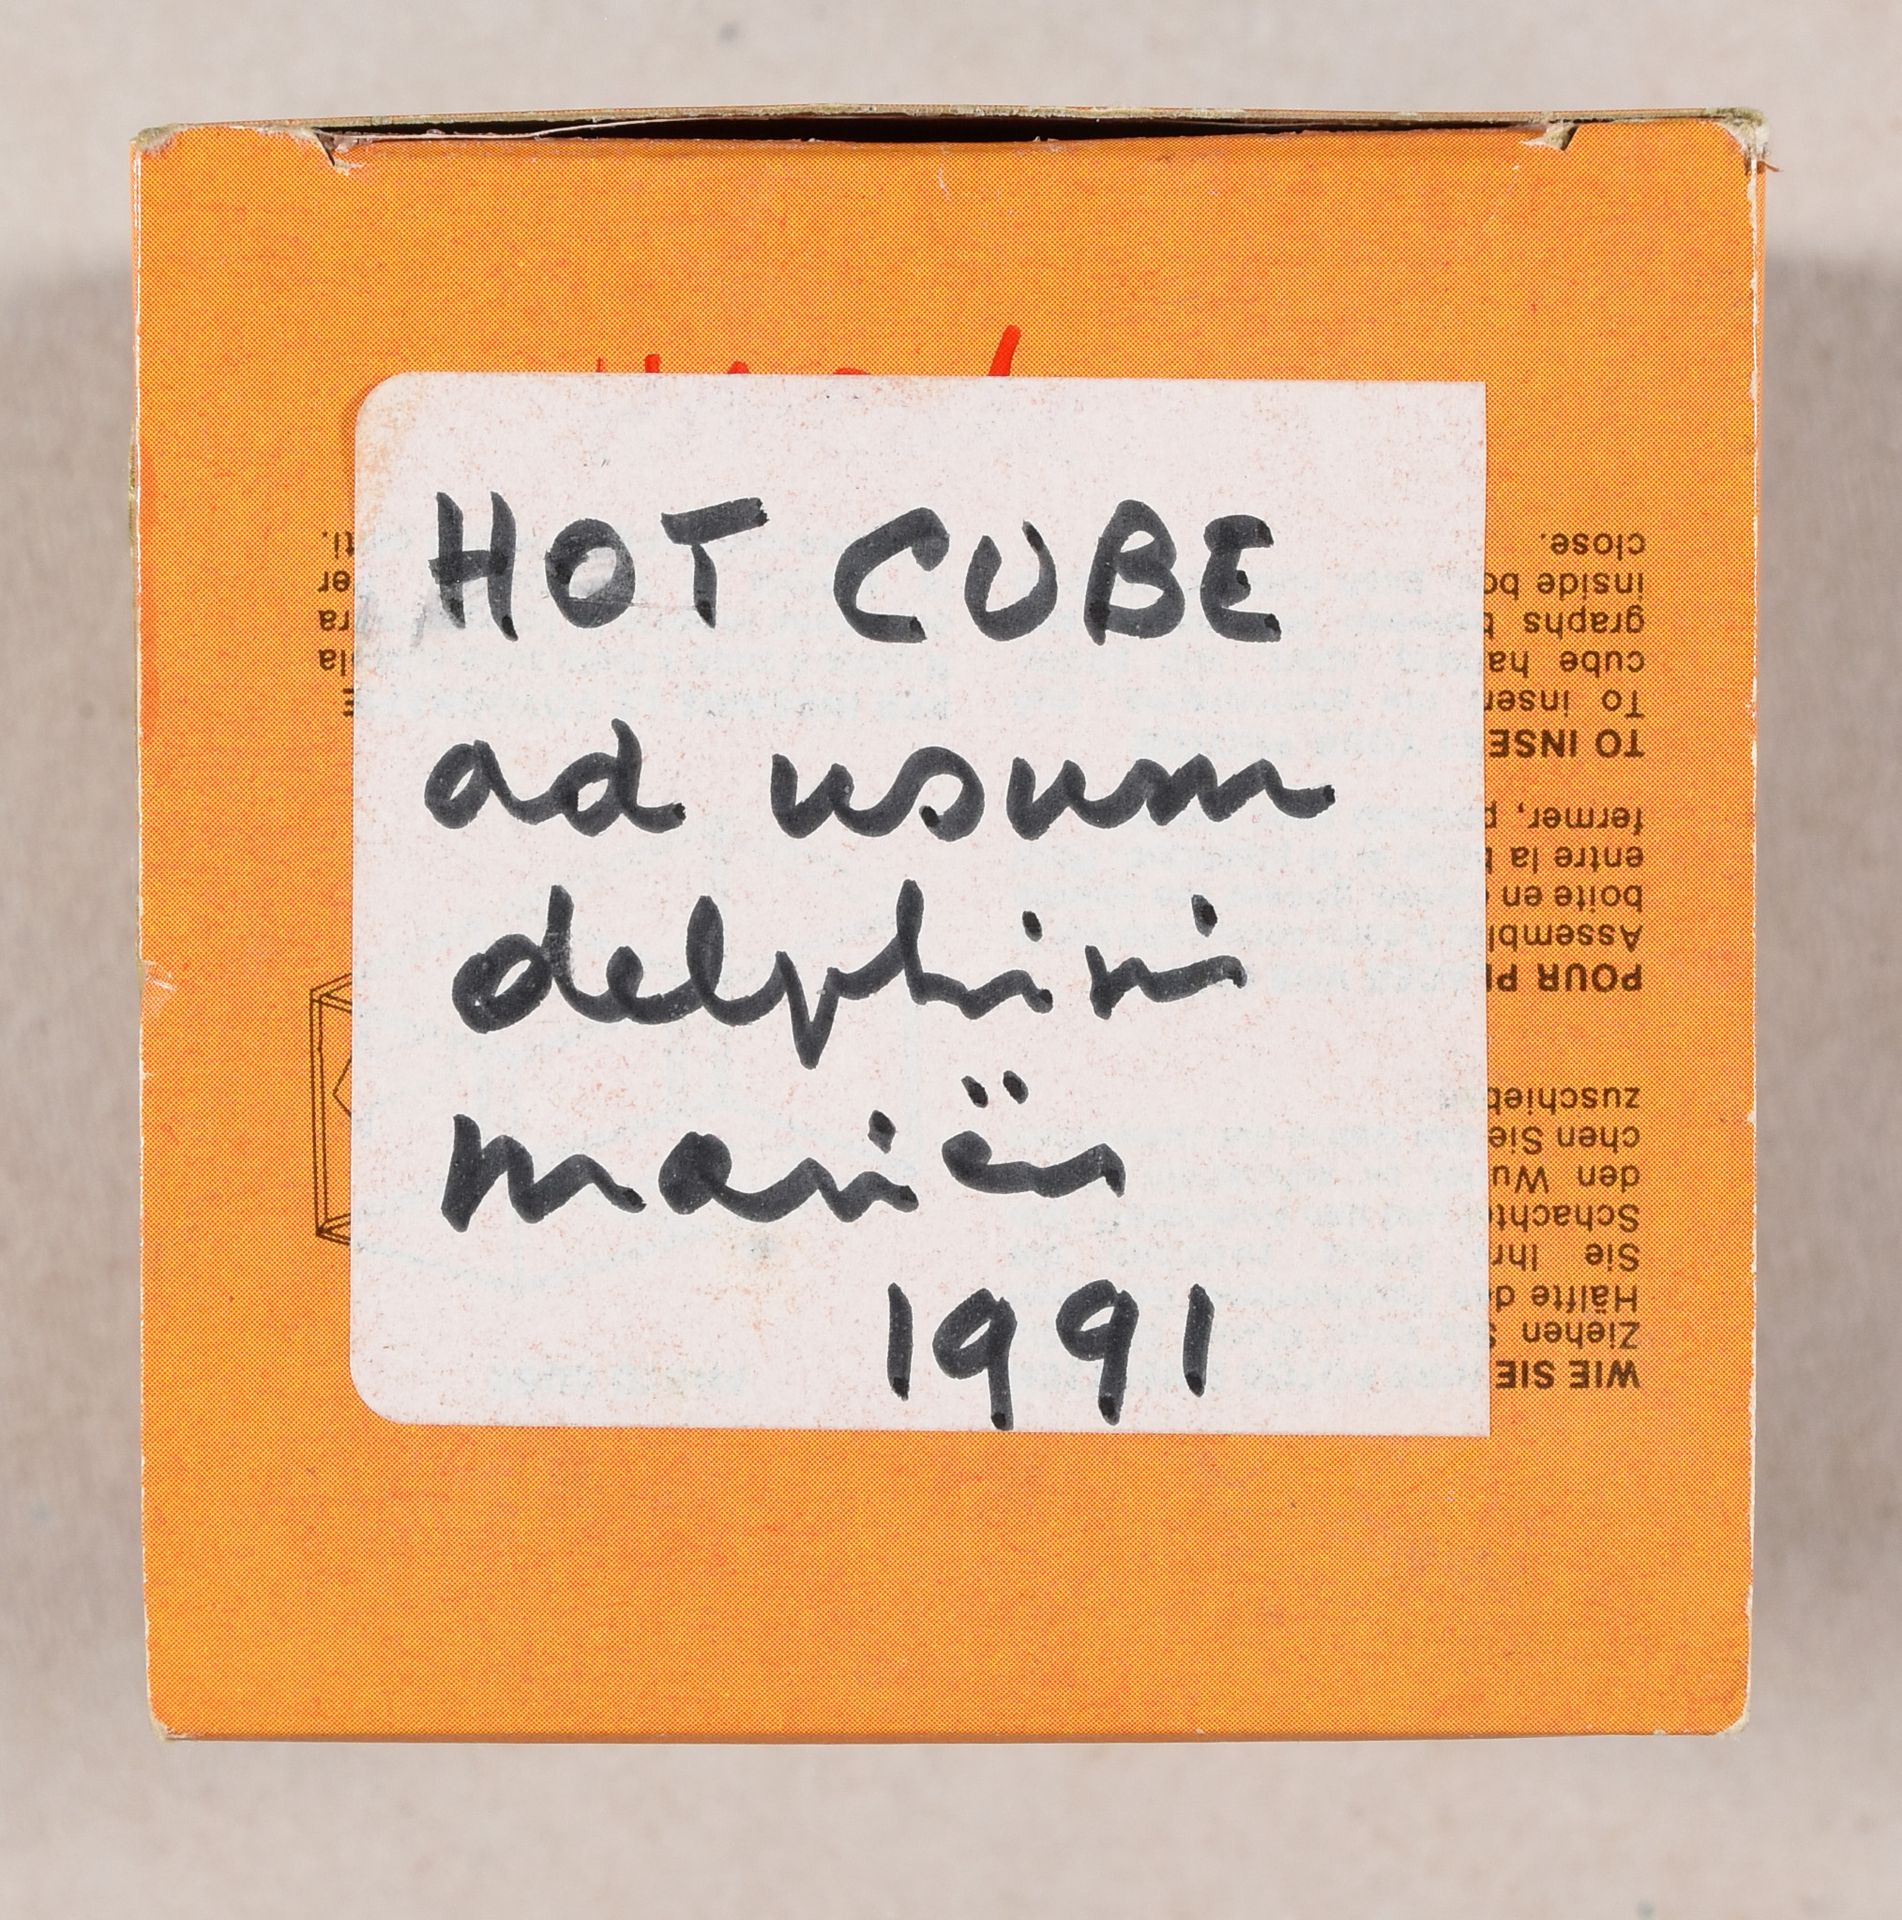 Mariën, Marcel MARIËN, Marcel Hot cube ad usum delphini. 1991 Collage sobre un c&hellip;